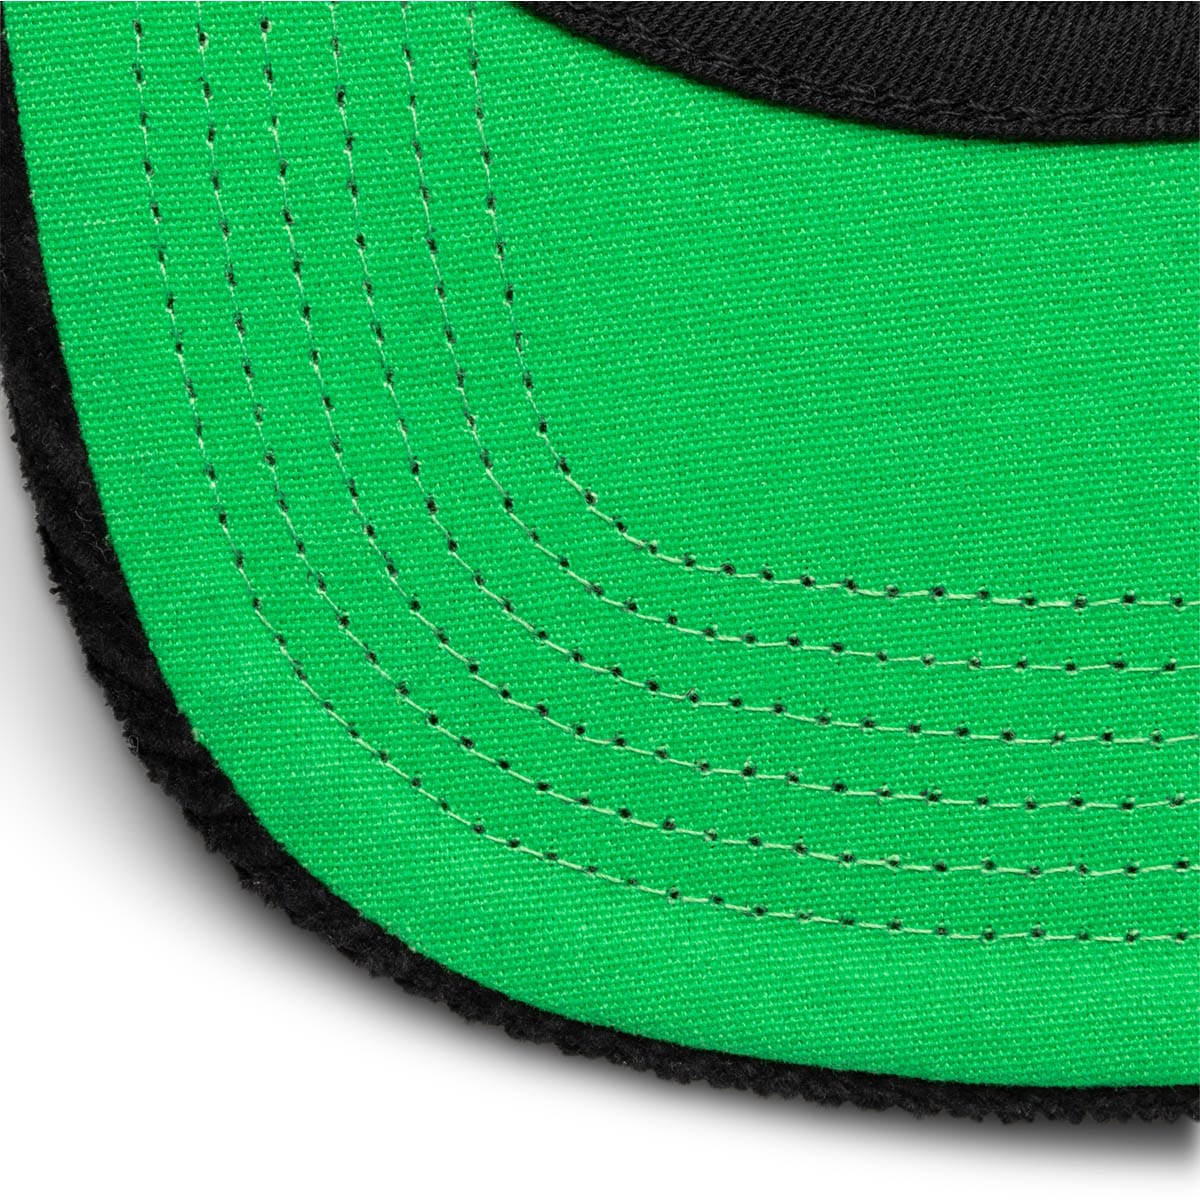 Mister Green Headwear BLACK / O/S THE HEADS CAP